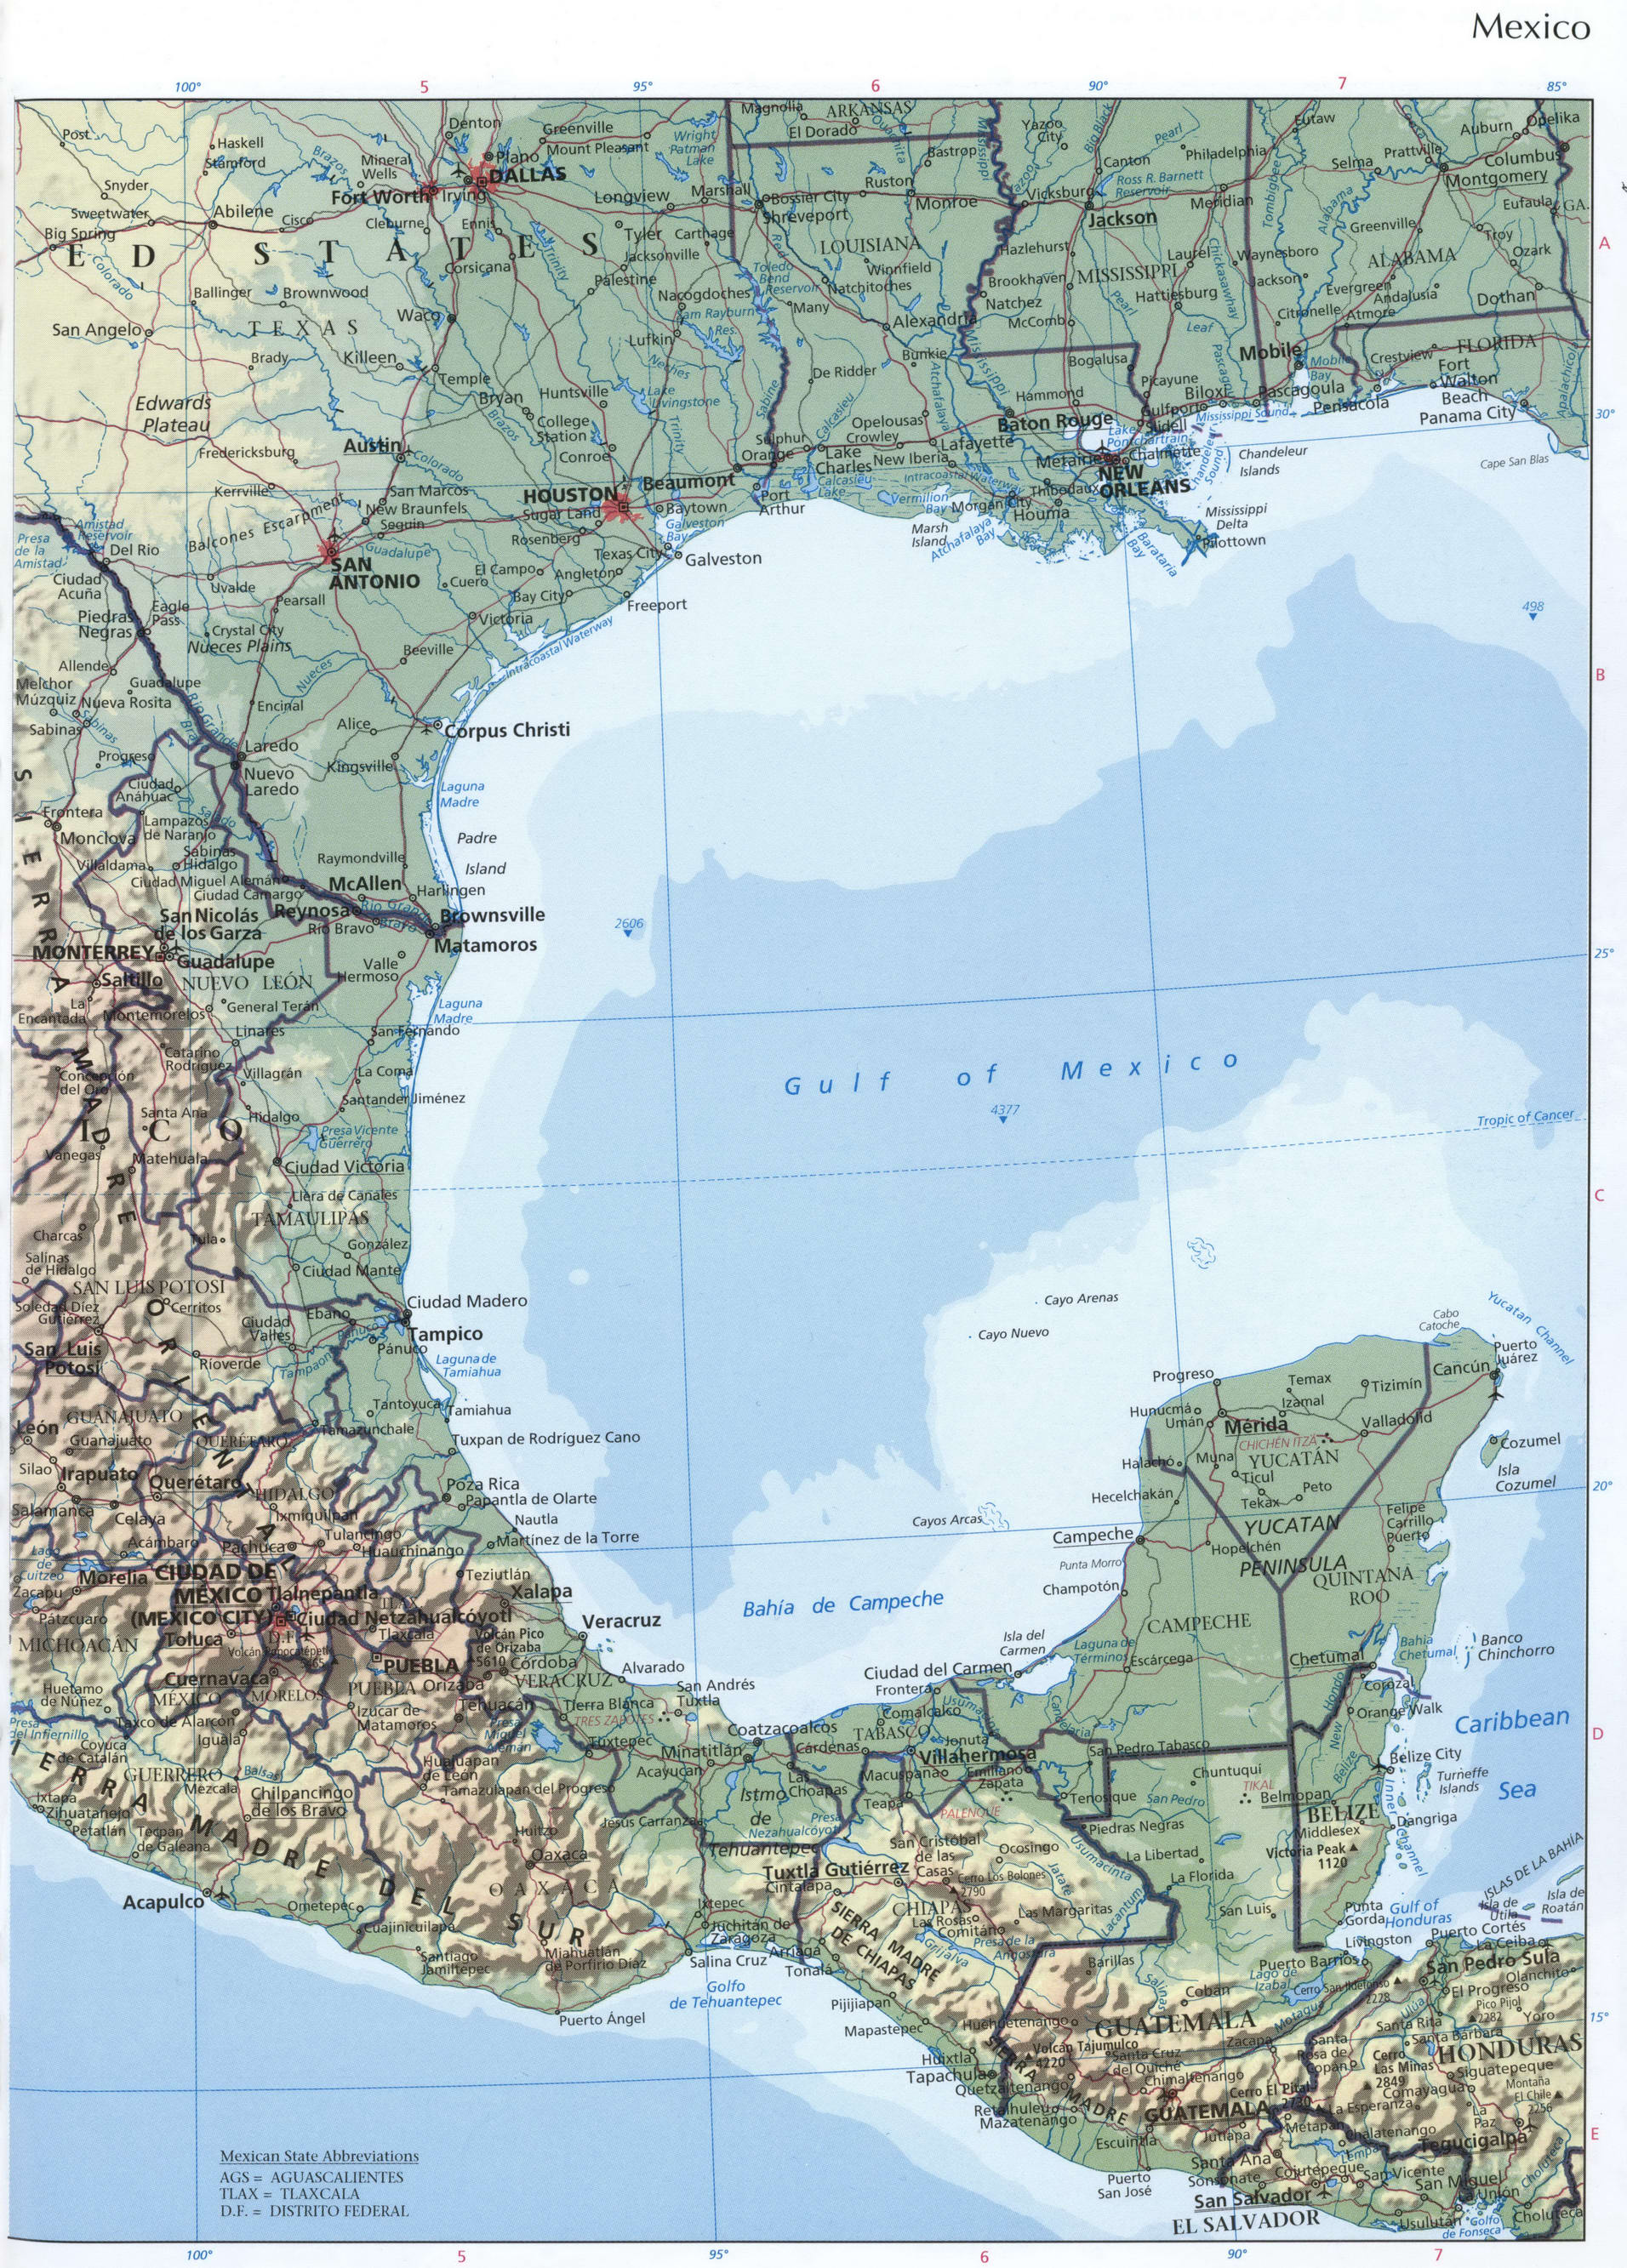 Mexico Atlantic coast map